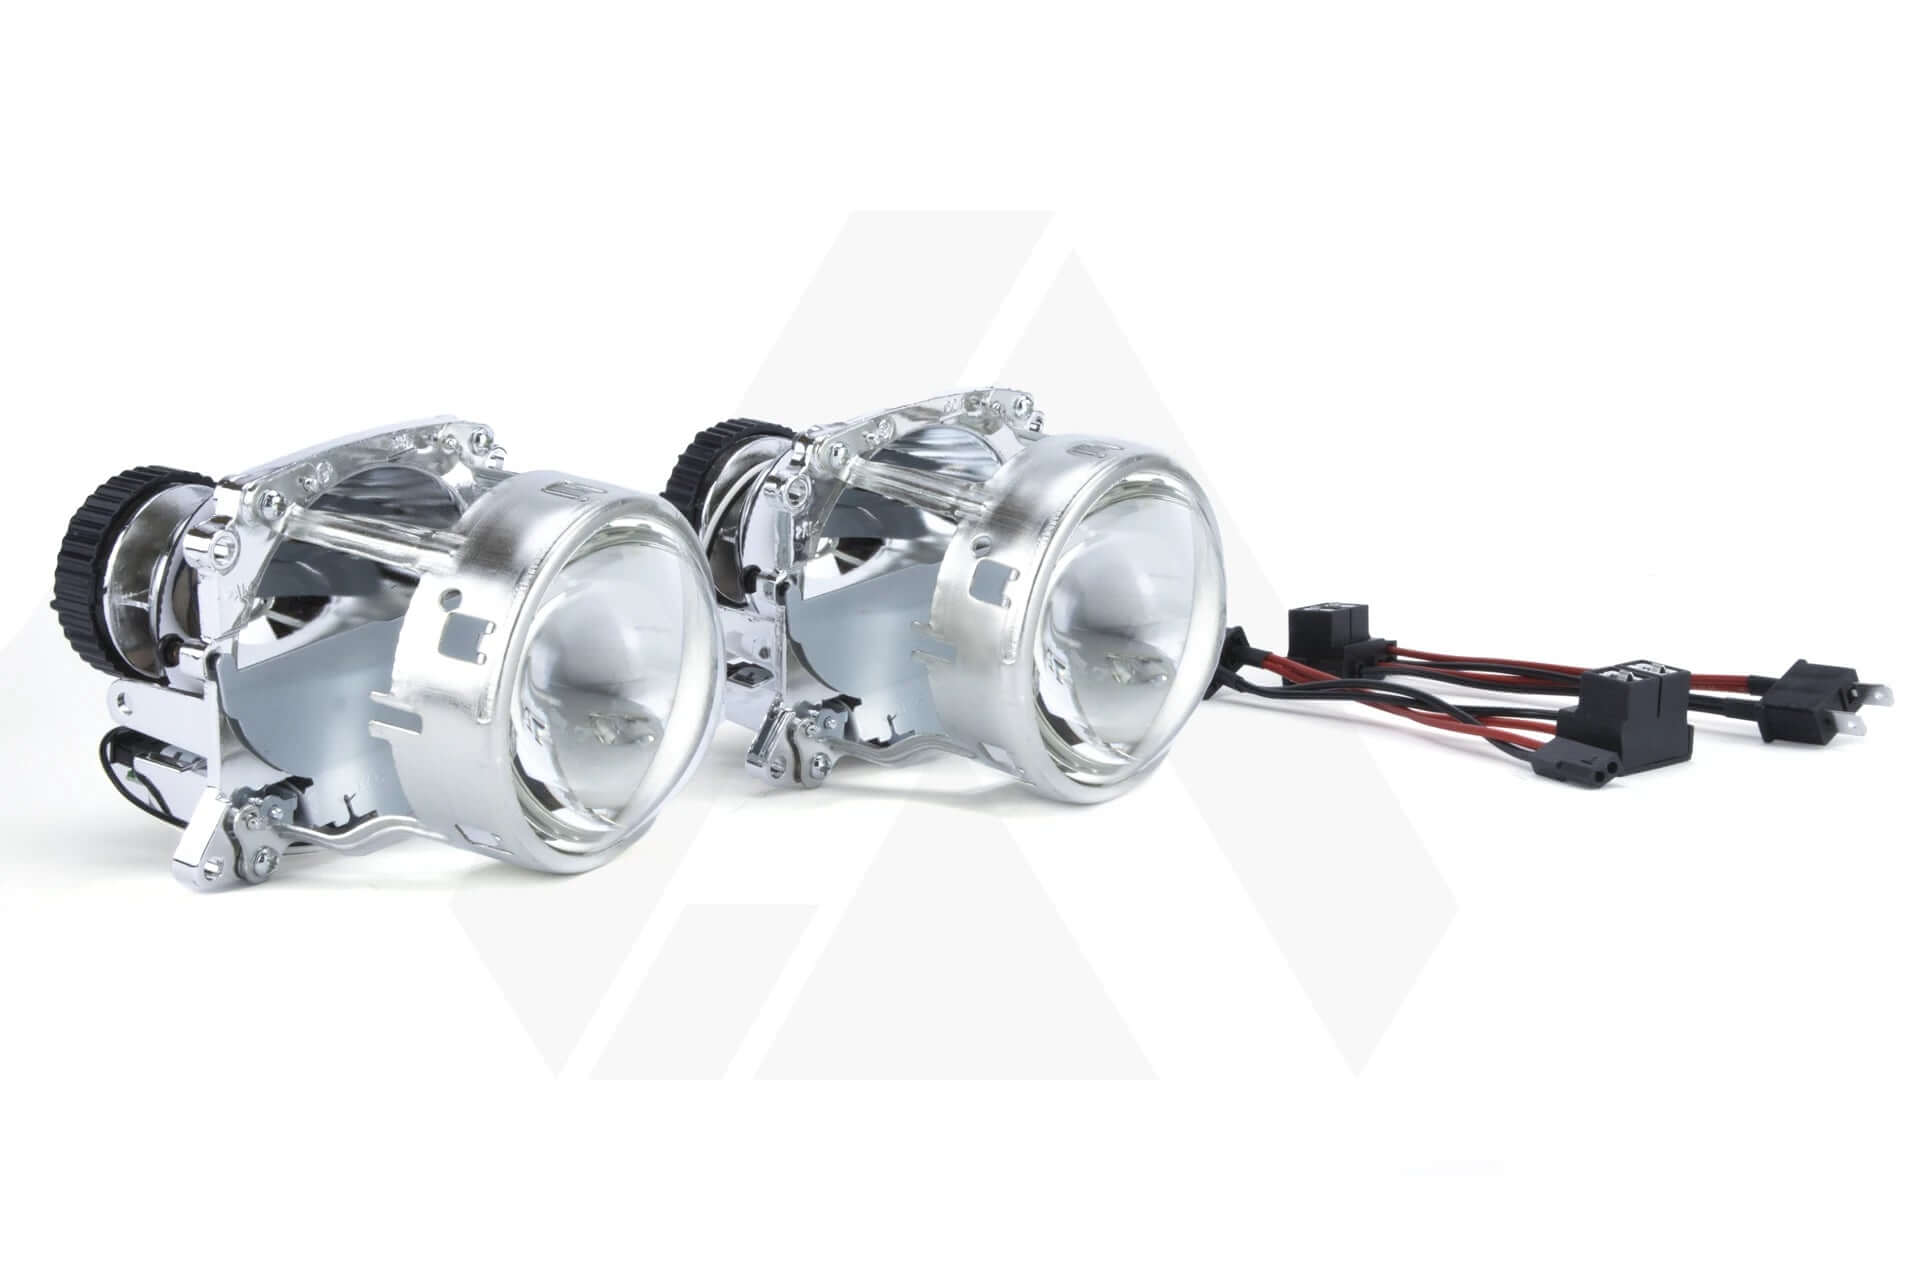 Mini Cooper R56 Headlight repair & upgrade kits HID xenon LED